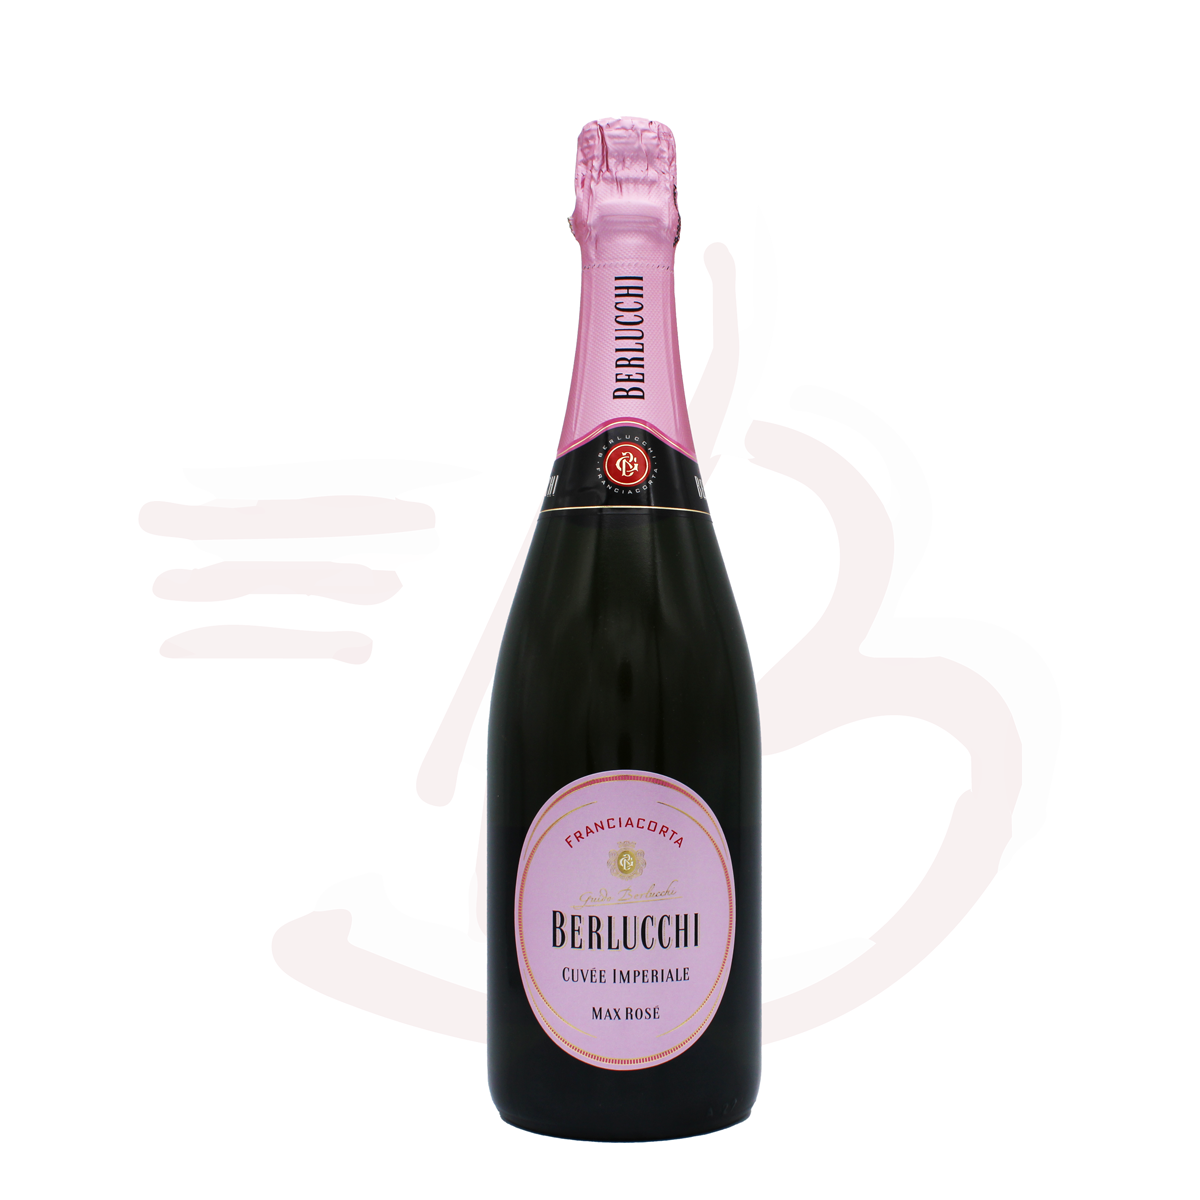 Berlucchi - Cuvée Imperiale Max Rosé 0,75l - Buonissimo Weinshop